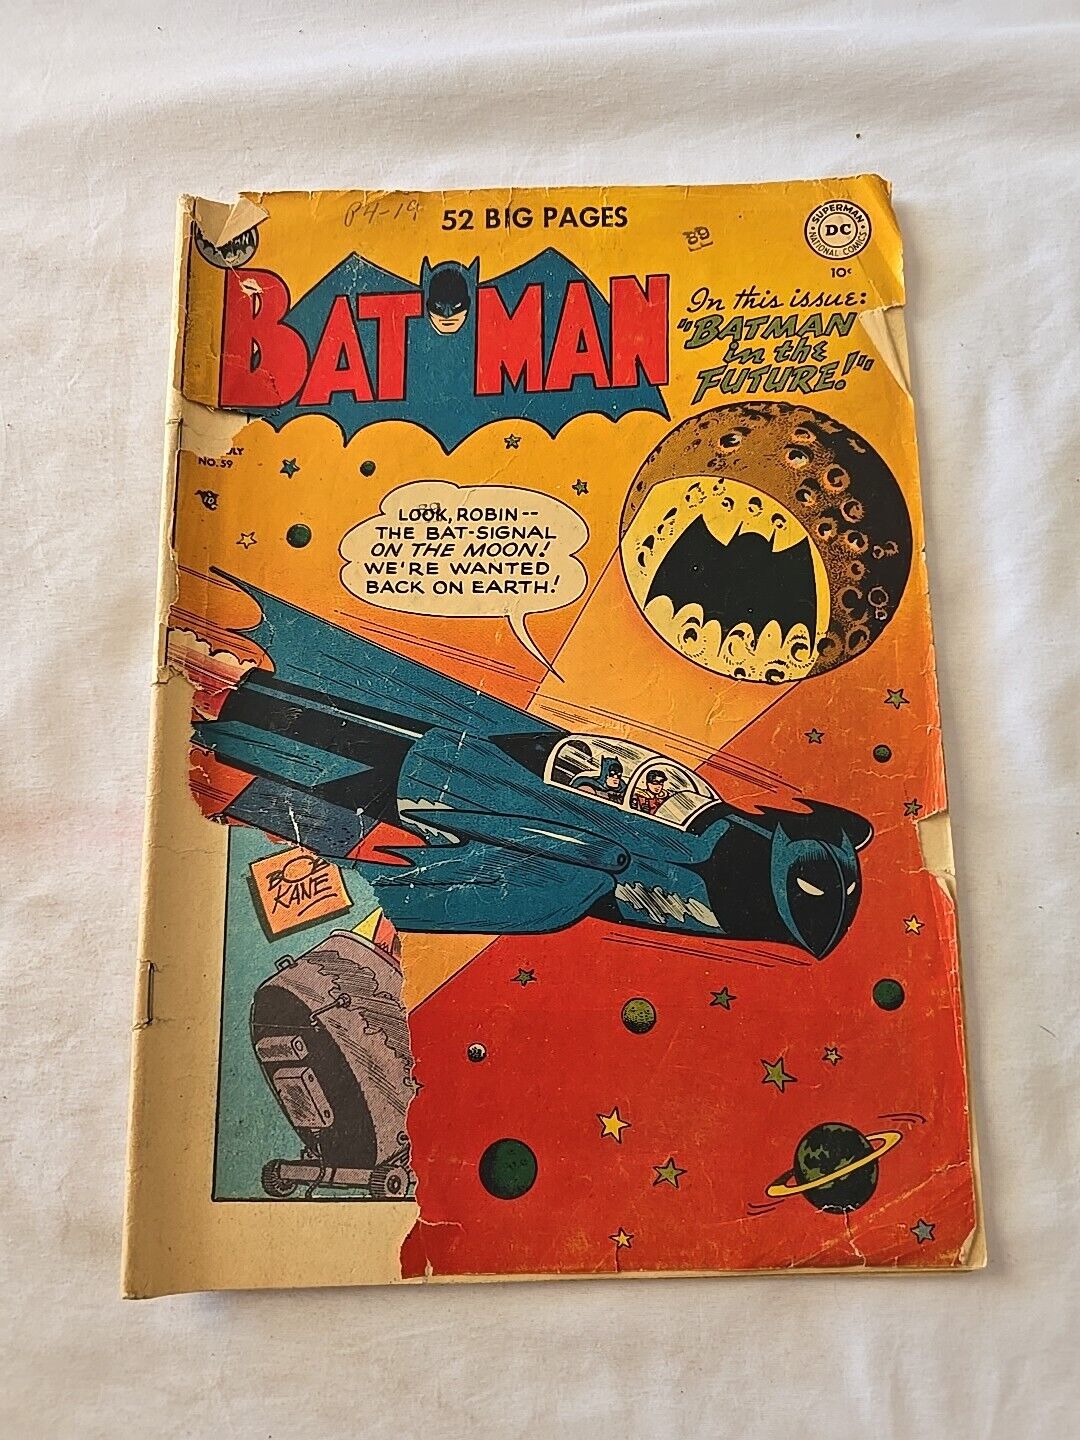 1950 BATMAN COMIC BOOK JUNE JULY NUMBER 59 MISSING BACK COVER 